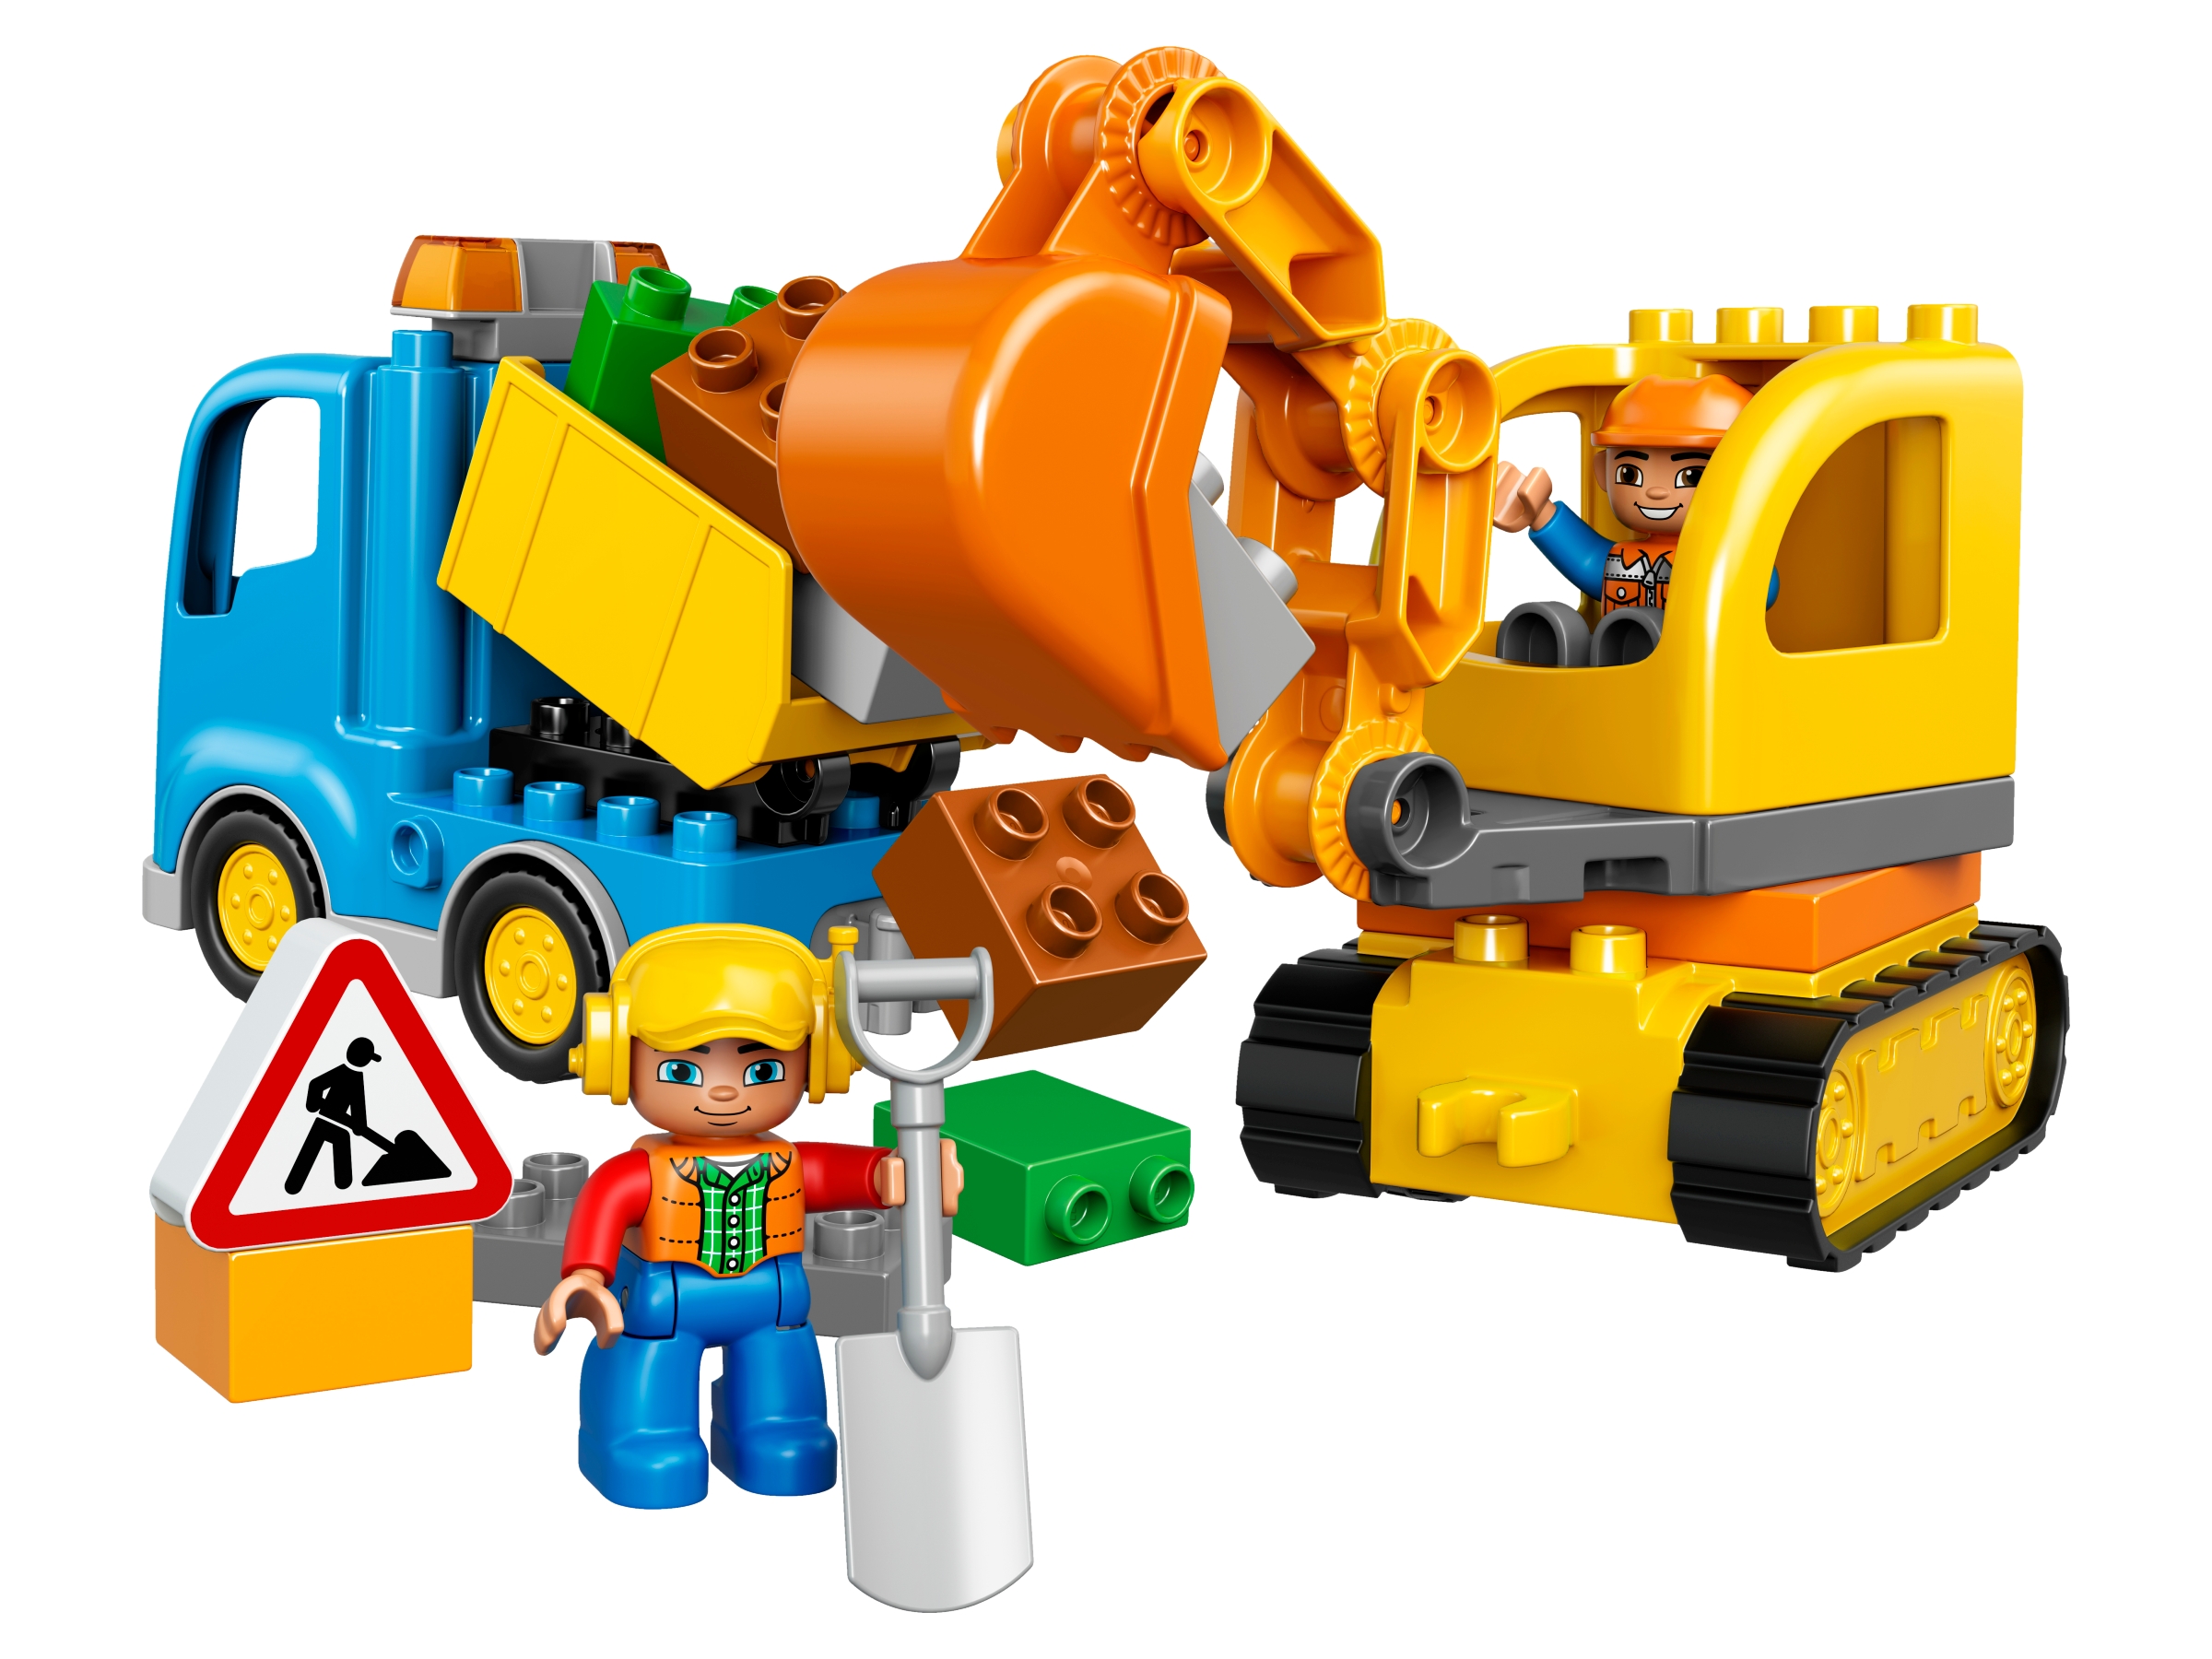 & Lastwagen 10812 | | Offiziellen LEGO®